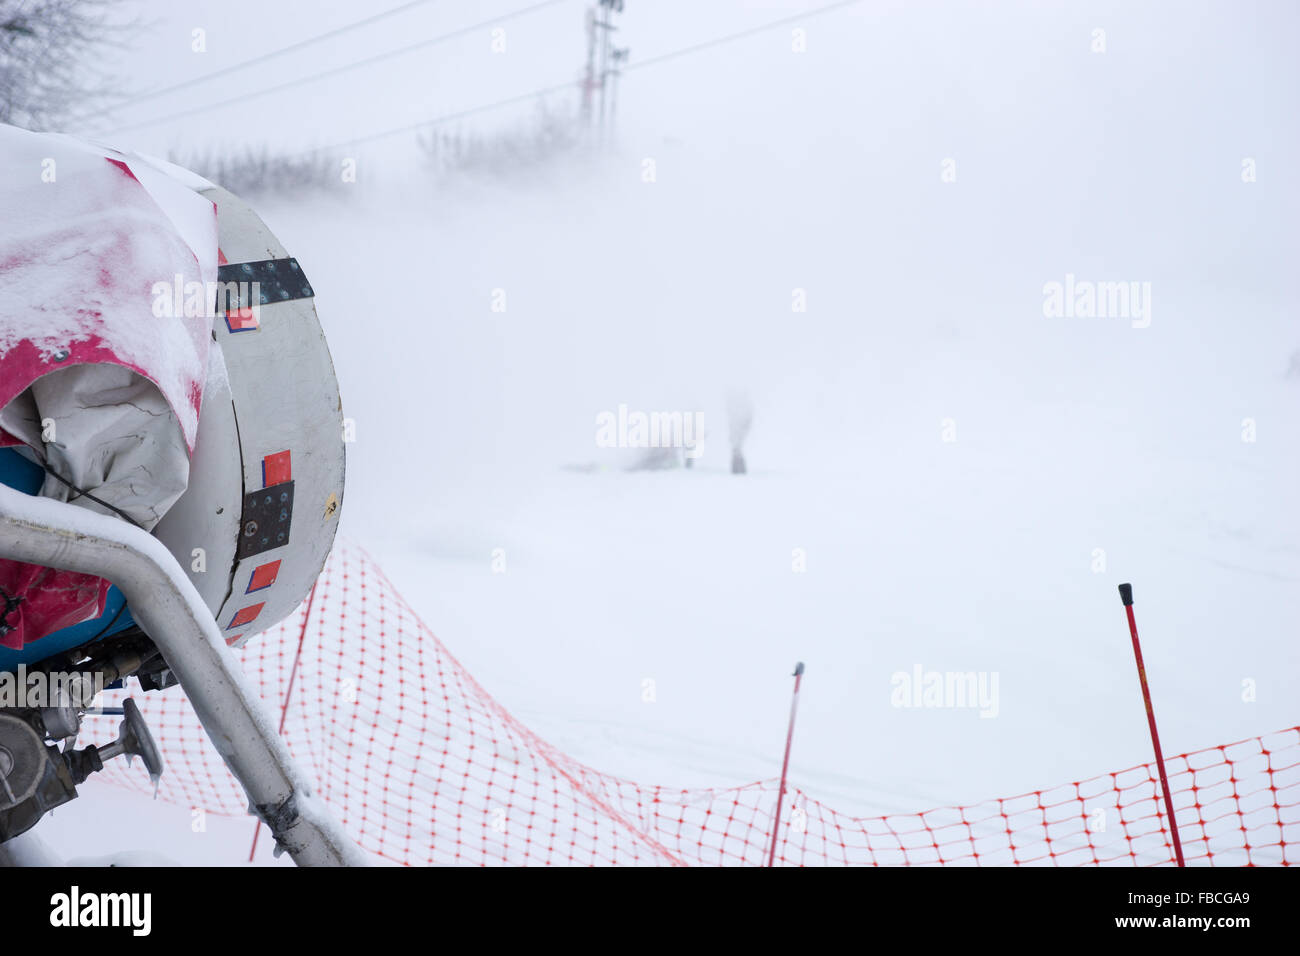 https://c8.alamy.com/comp/FBCGA9/artificial-snow-machine-at-a-ski-resort-blowing-fresh-powder-onto-FBCGA9.jpg